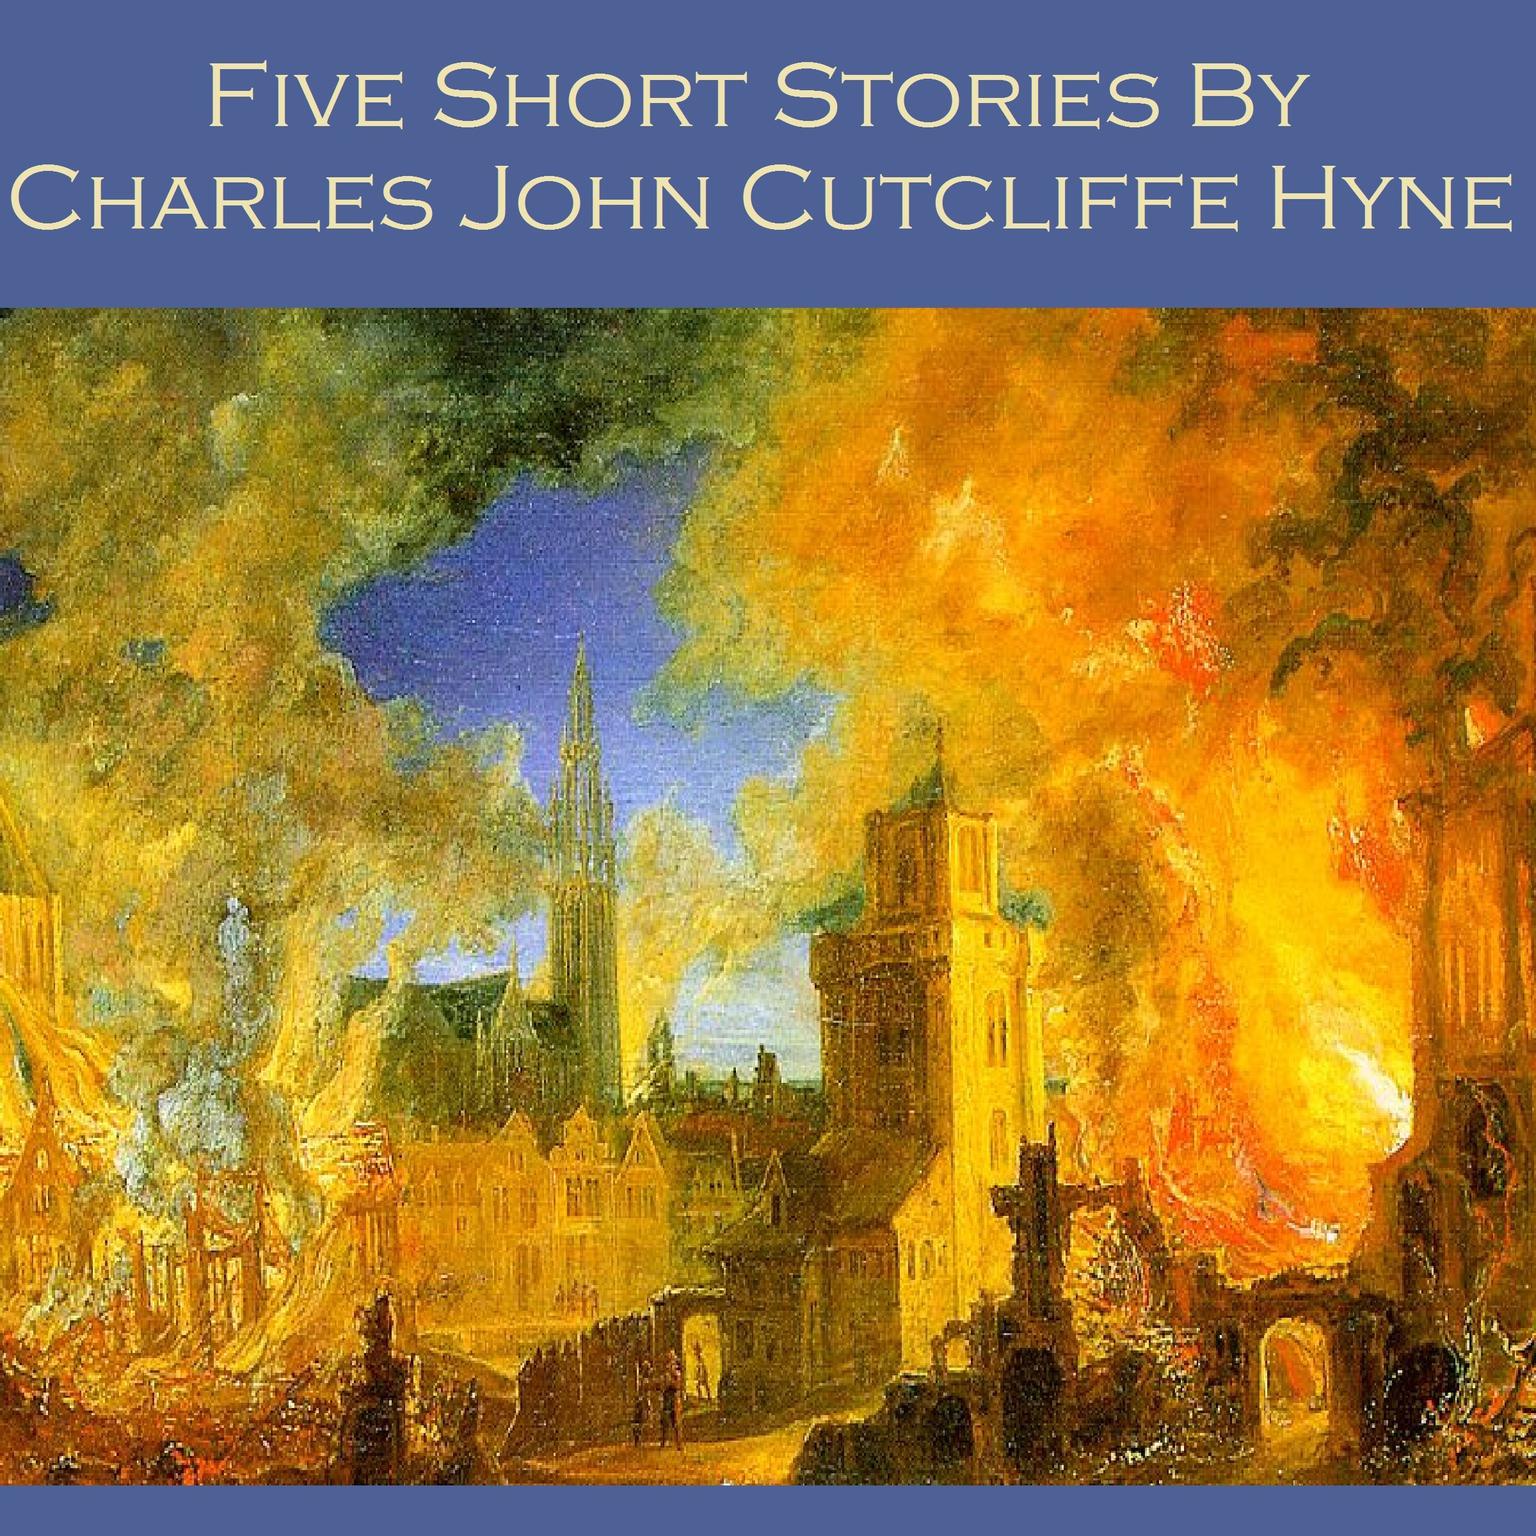 Five Short Stories by Charles John Cutcliffe Hyne Audiobook, by Charles John Cutcliffe Hyne